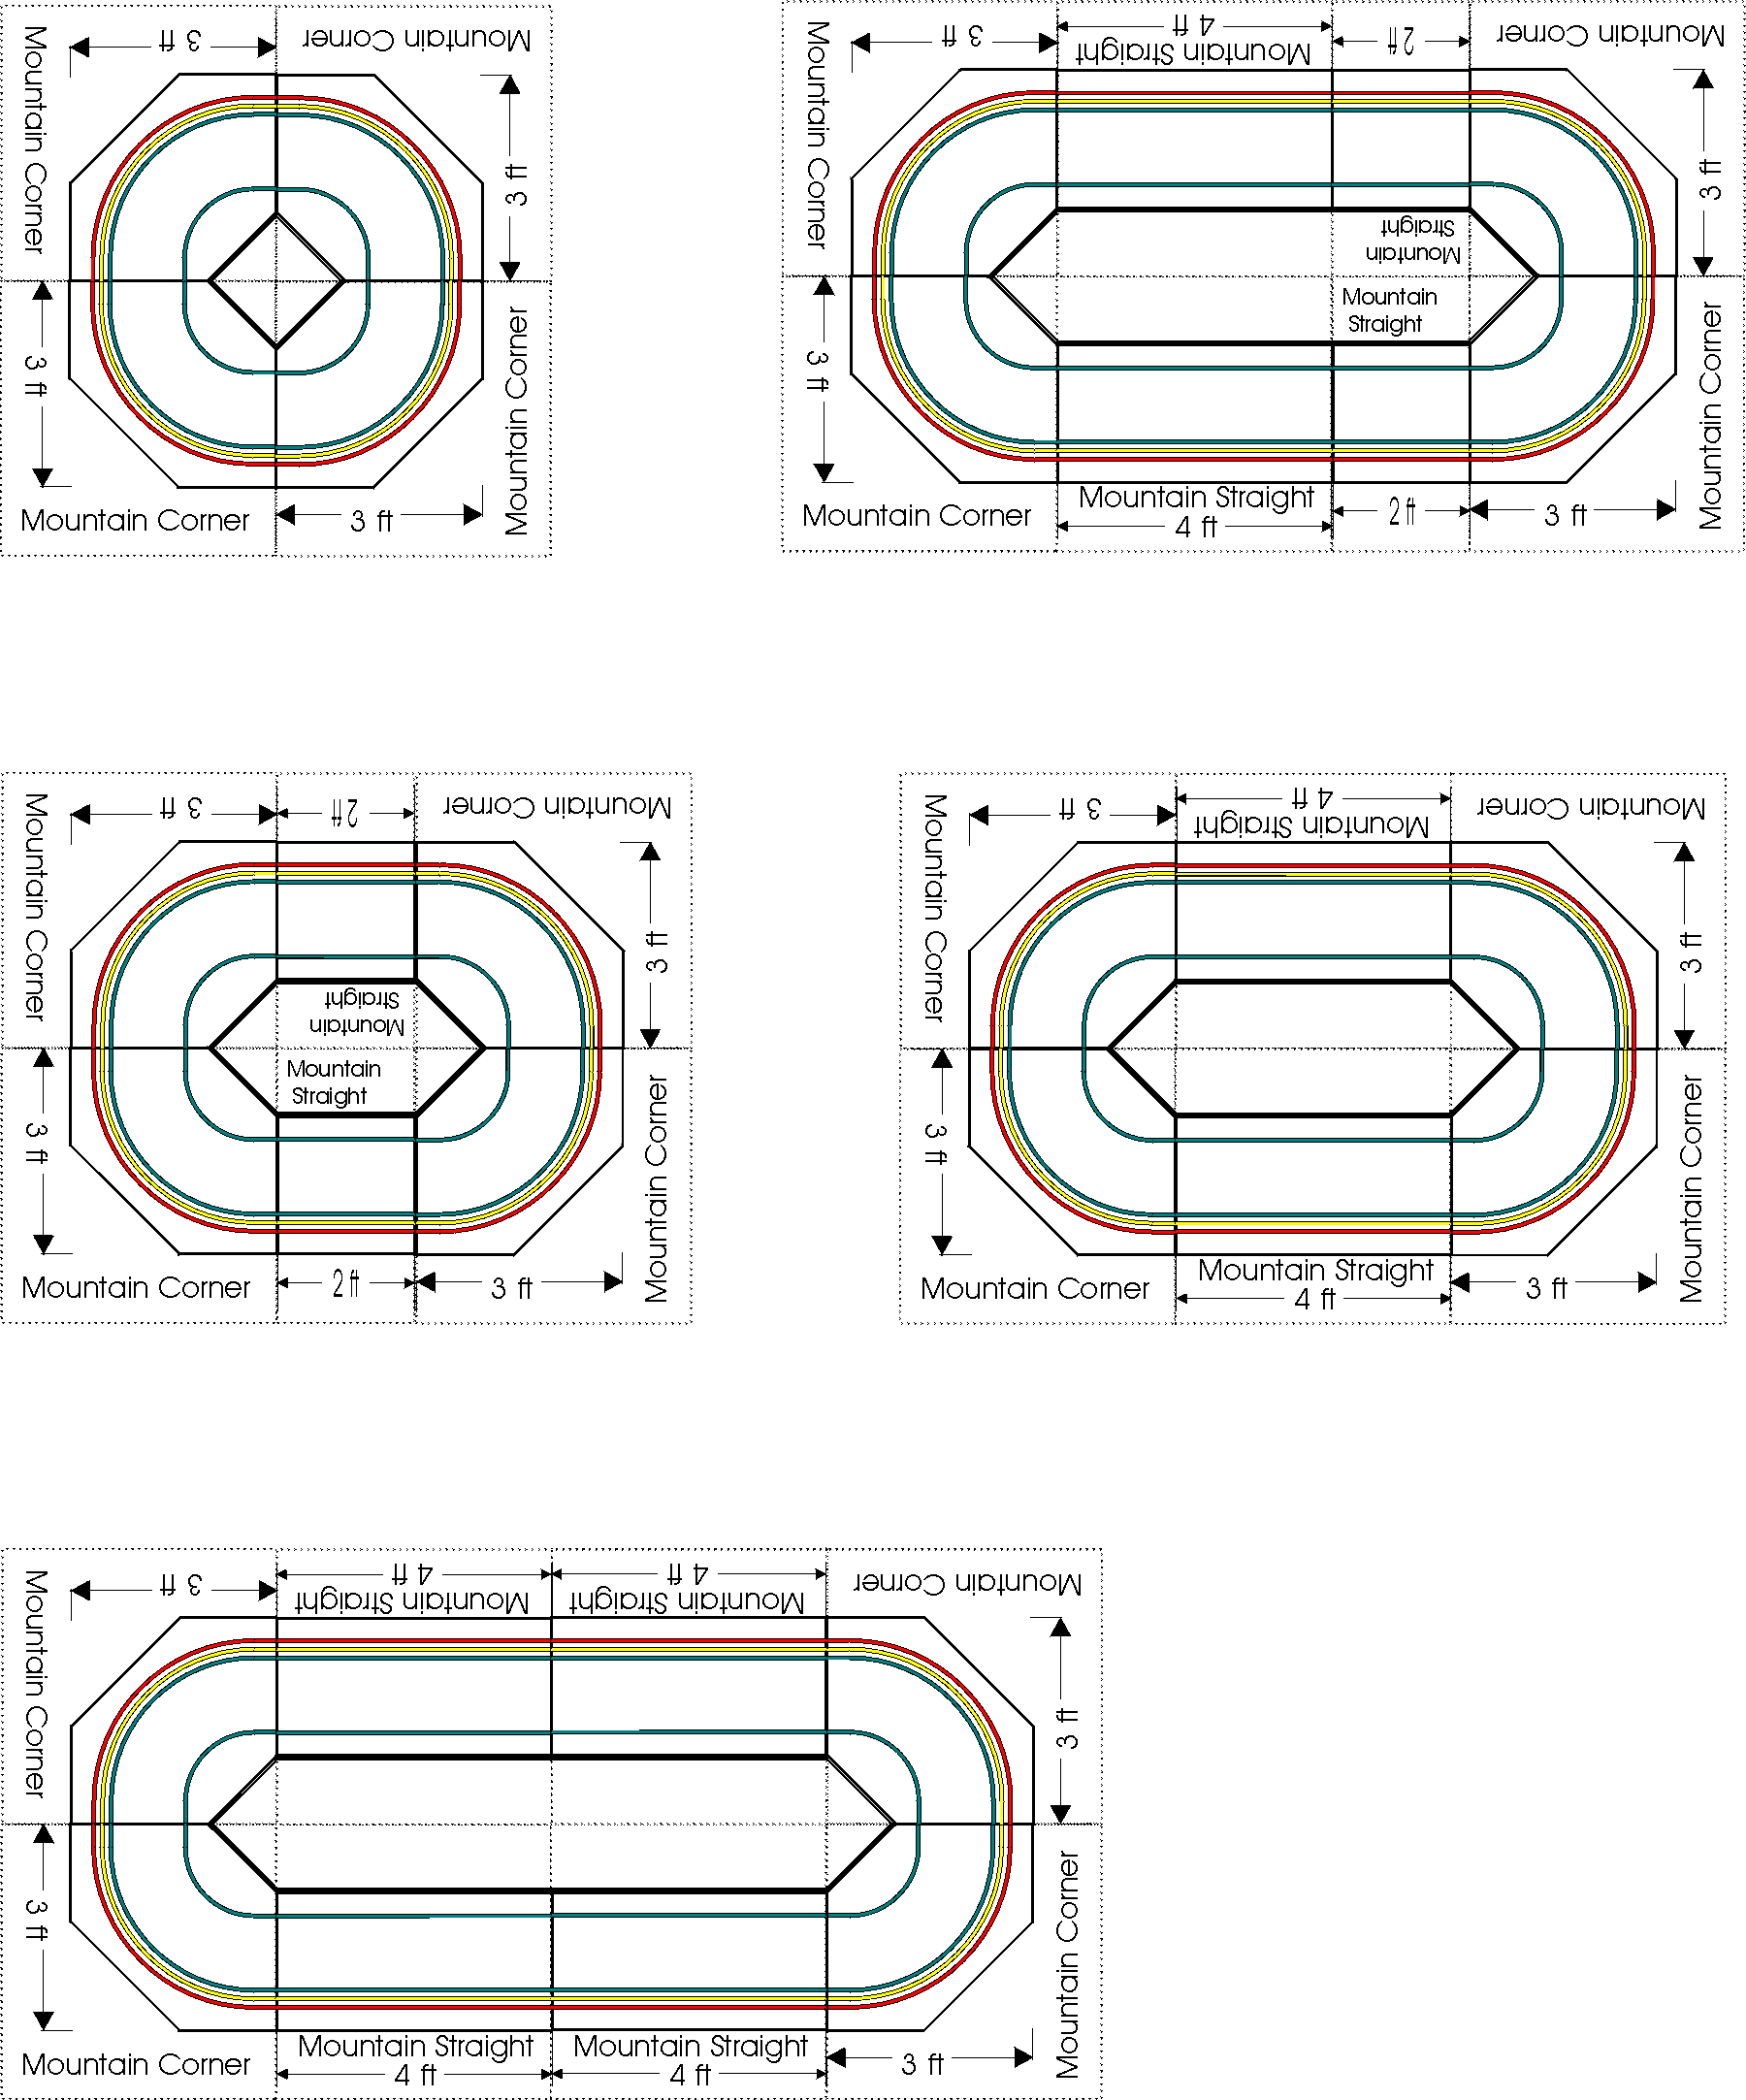 Sample N-Trak layouts